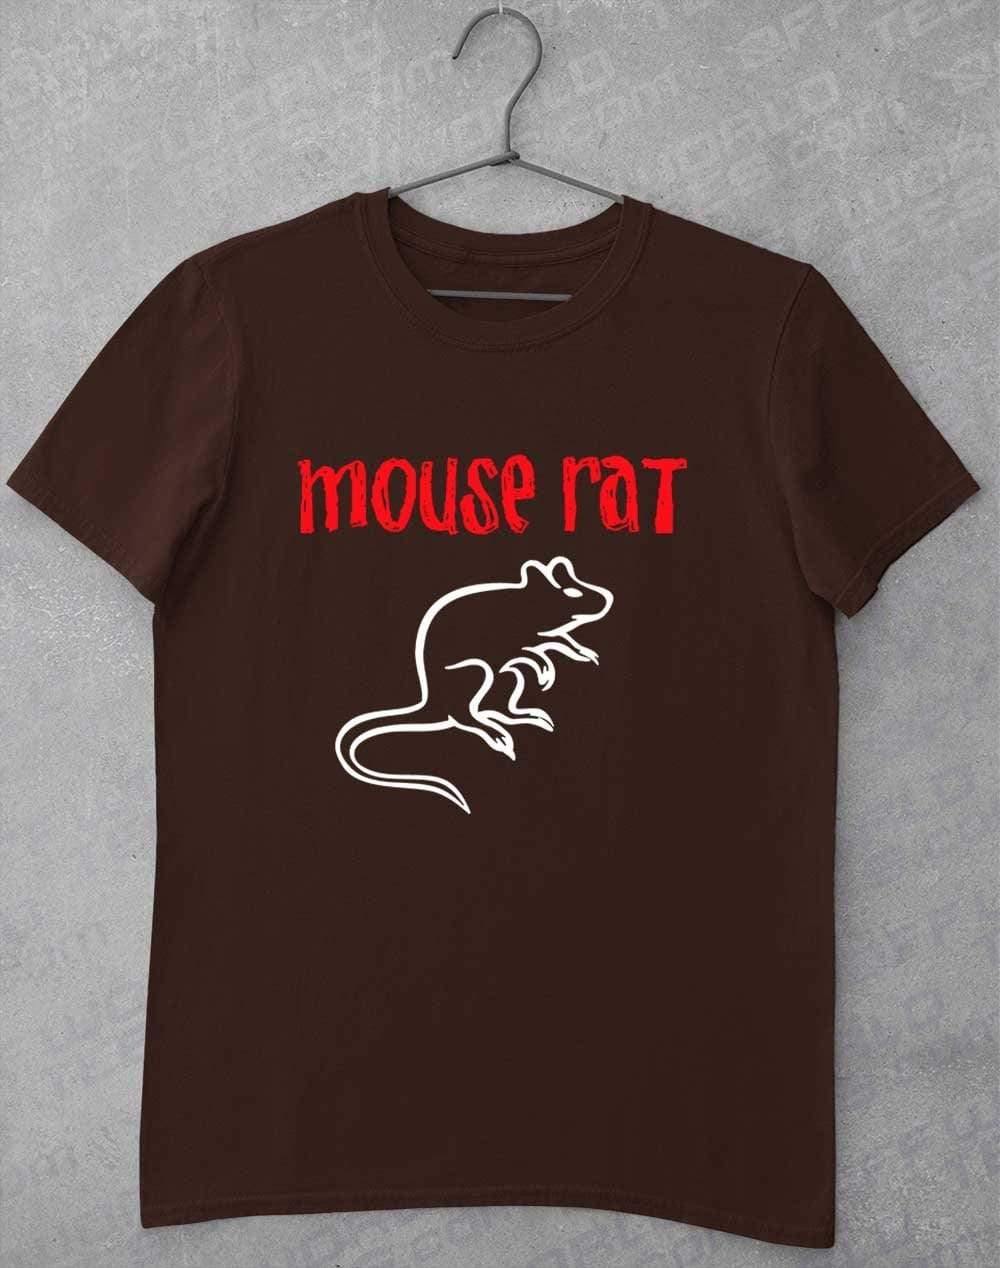 Mouse Rat Text Logo T-Shirt S / Dark Chocolate  - Off World Tees